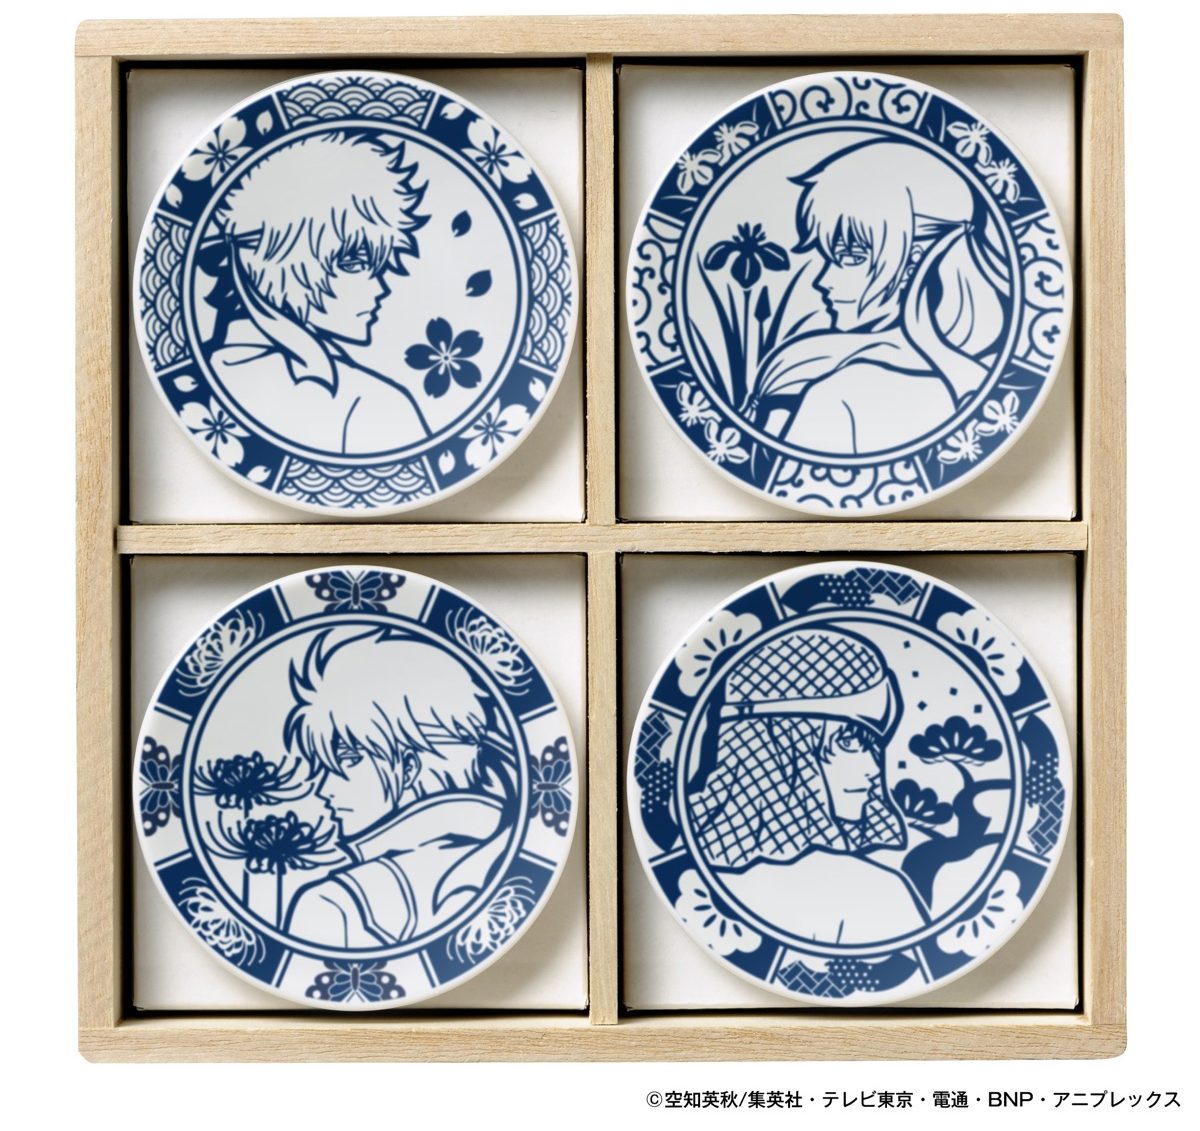 Sword Art Online Anime Manga Asuna Handmade Artist Signed Pottery Coffee  Mug - NK Industries LTD